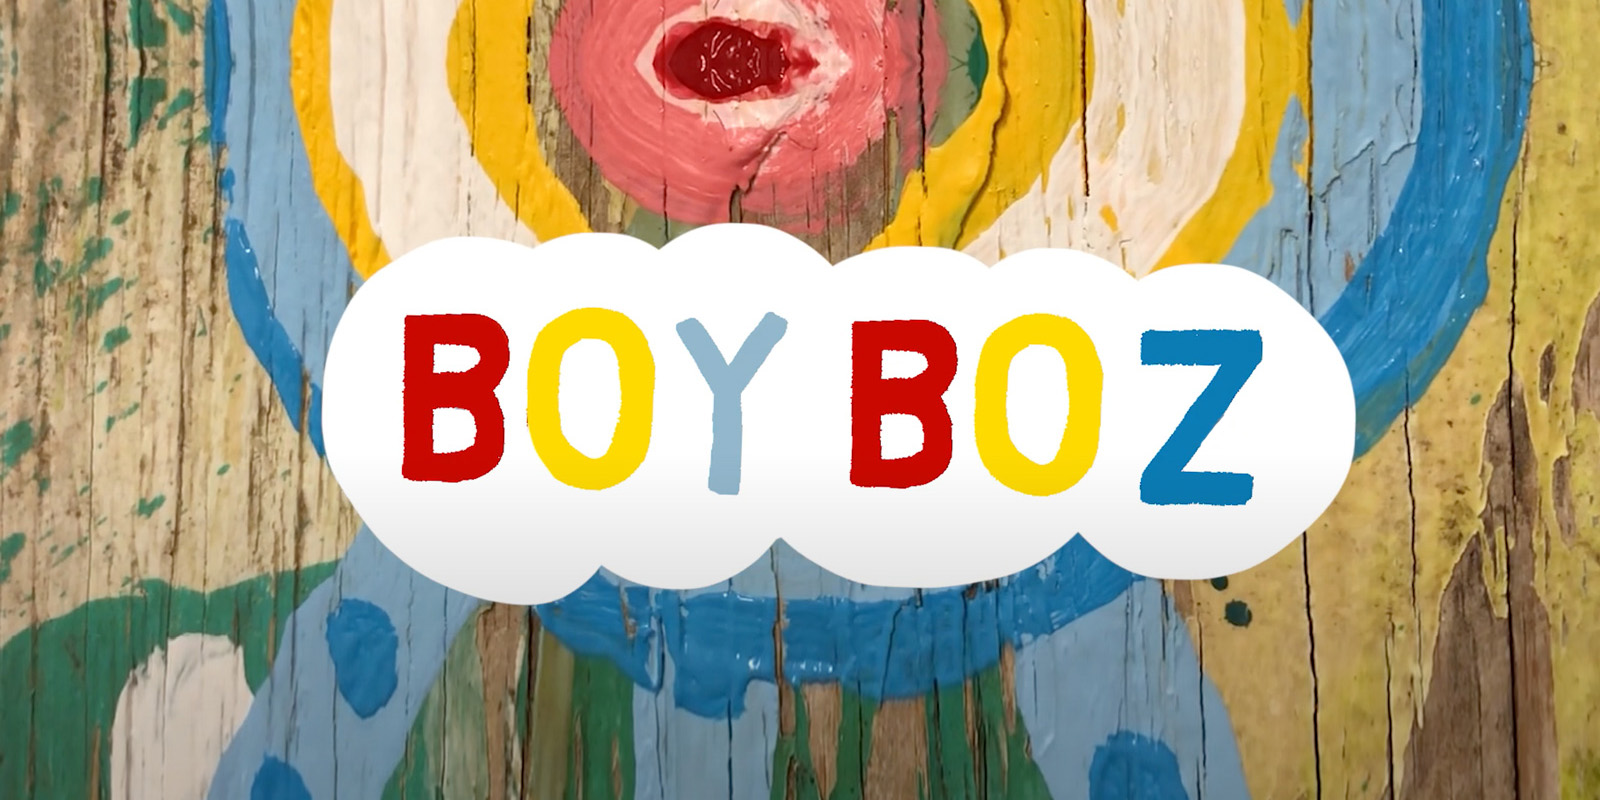 Boy Boz – a short art film